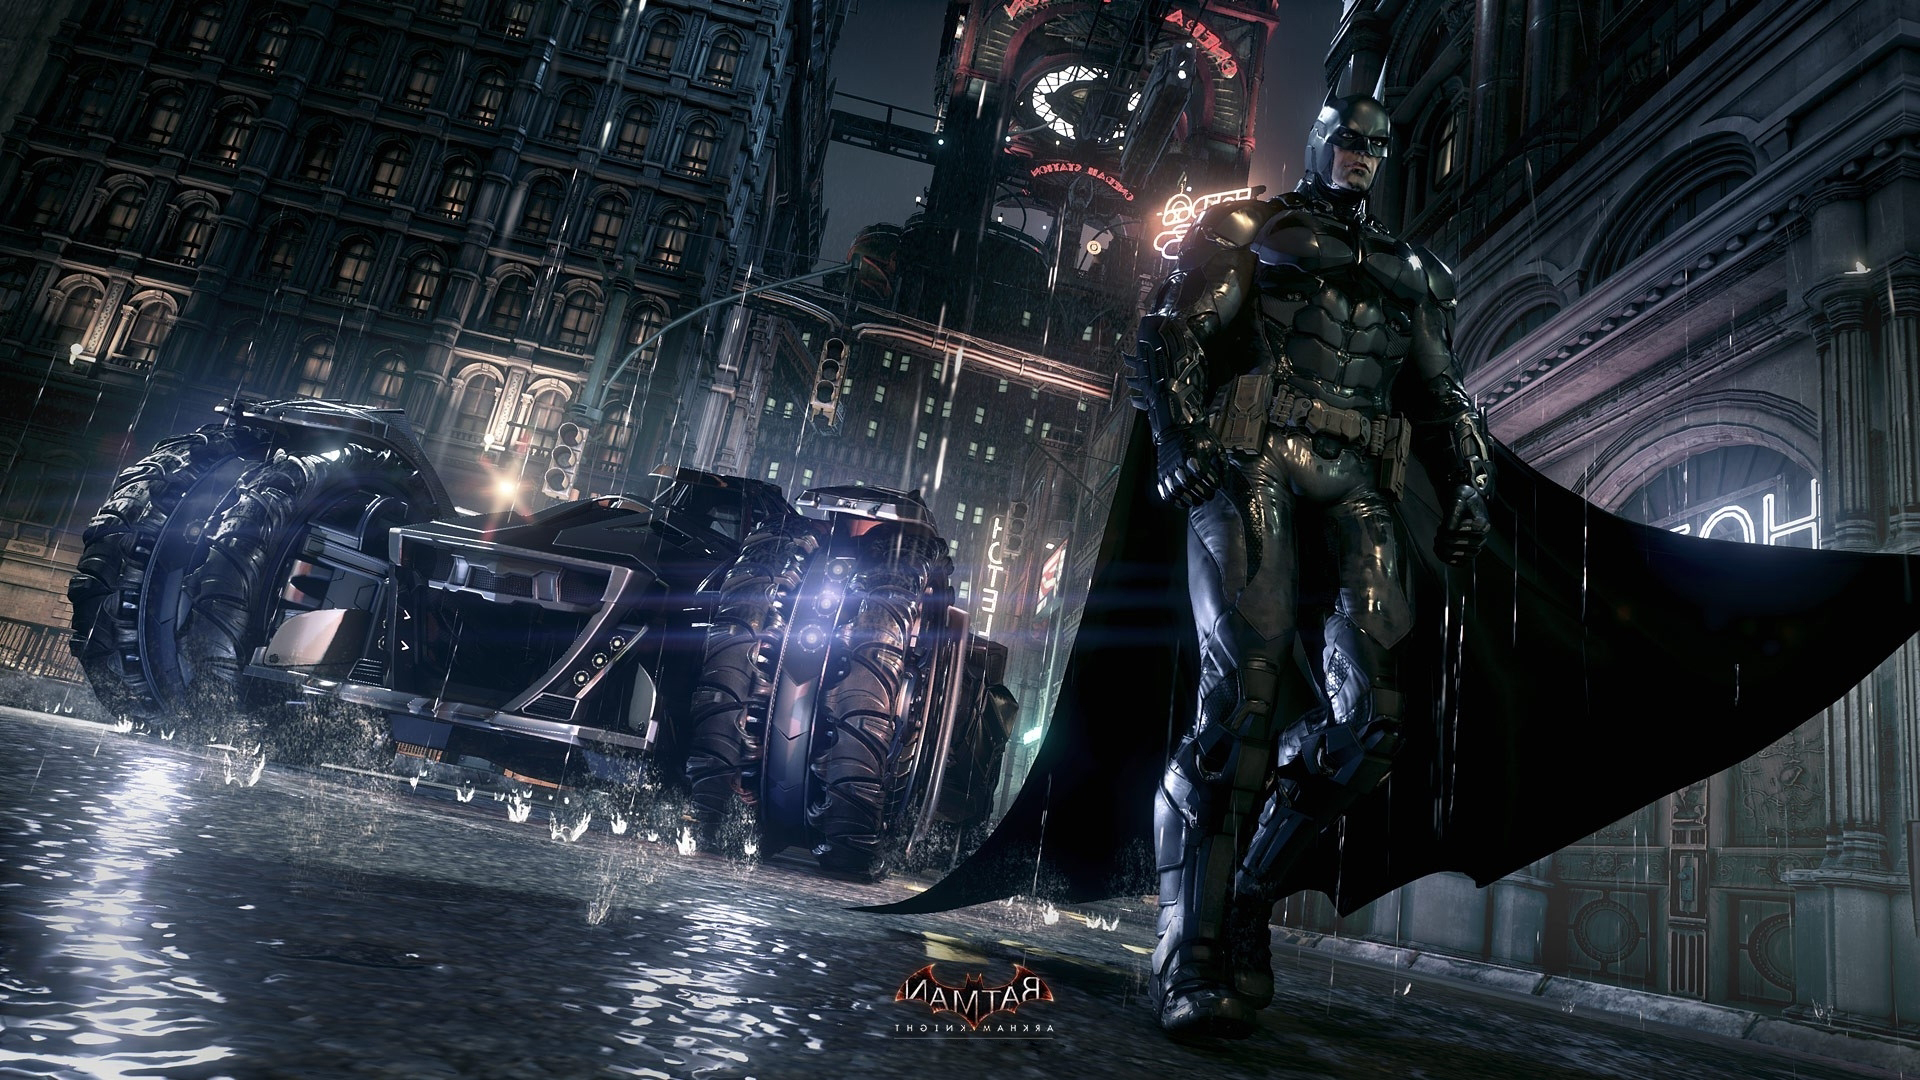 Batman Arkham Knight HD Wallpaper - Stylish HD Wallpapers